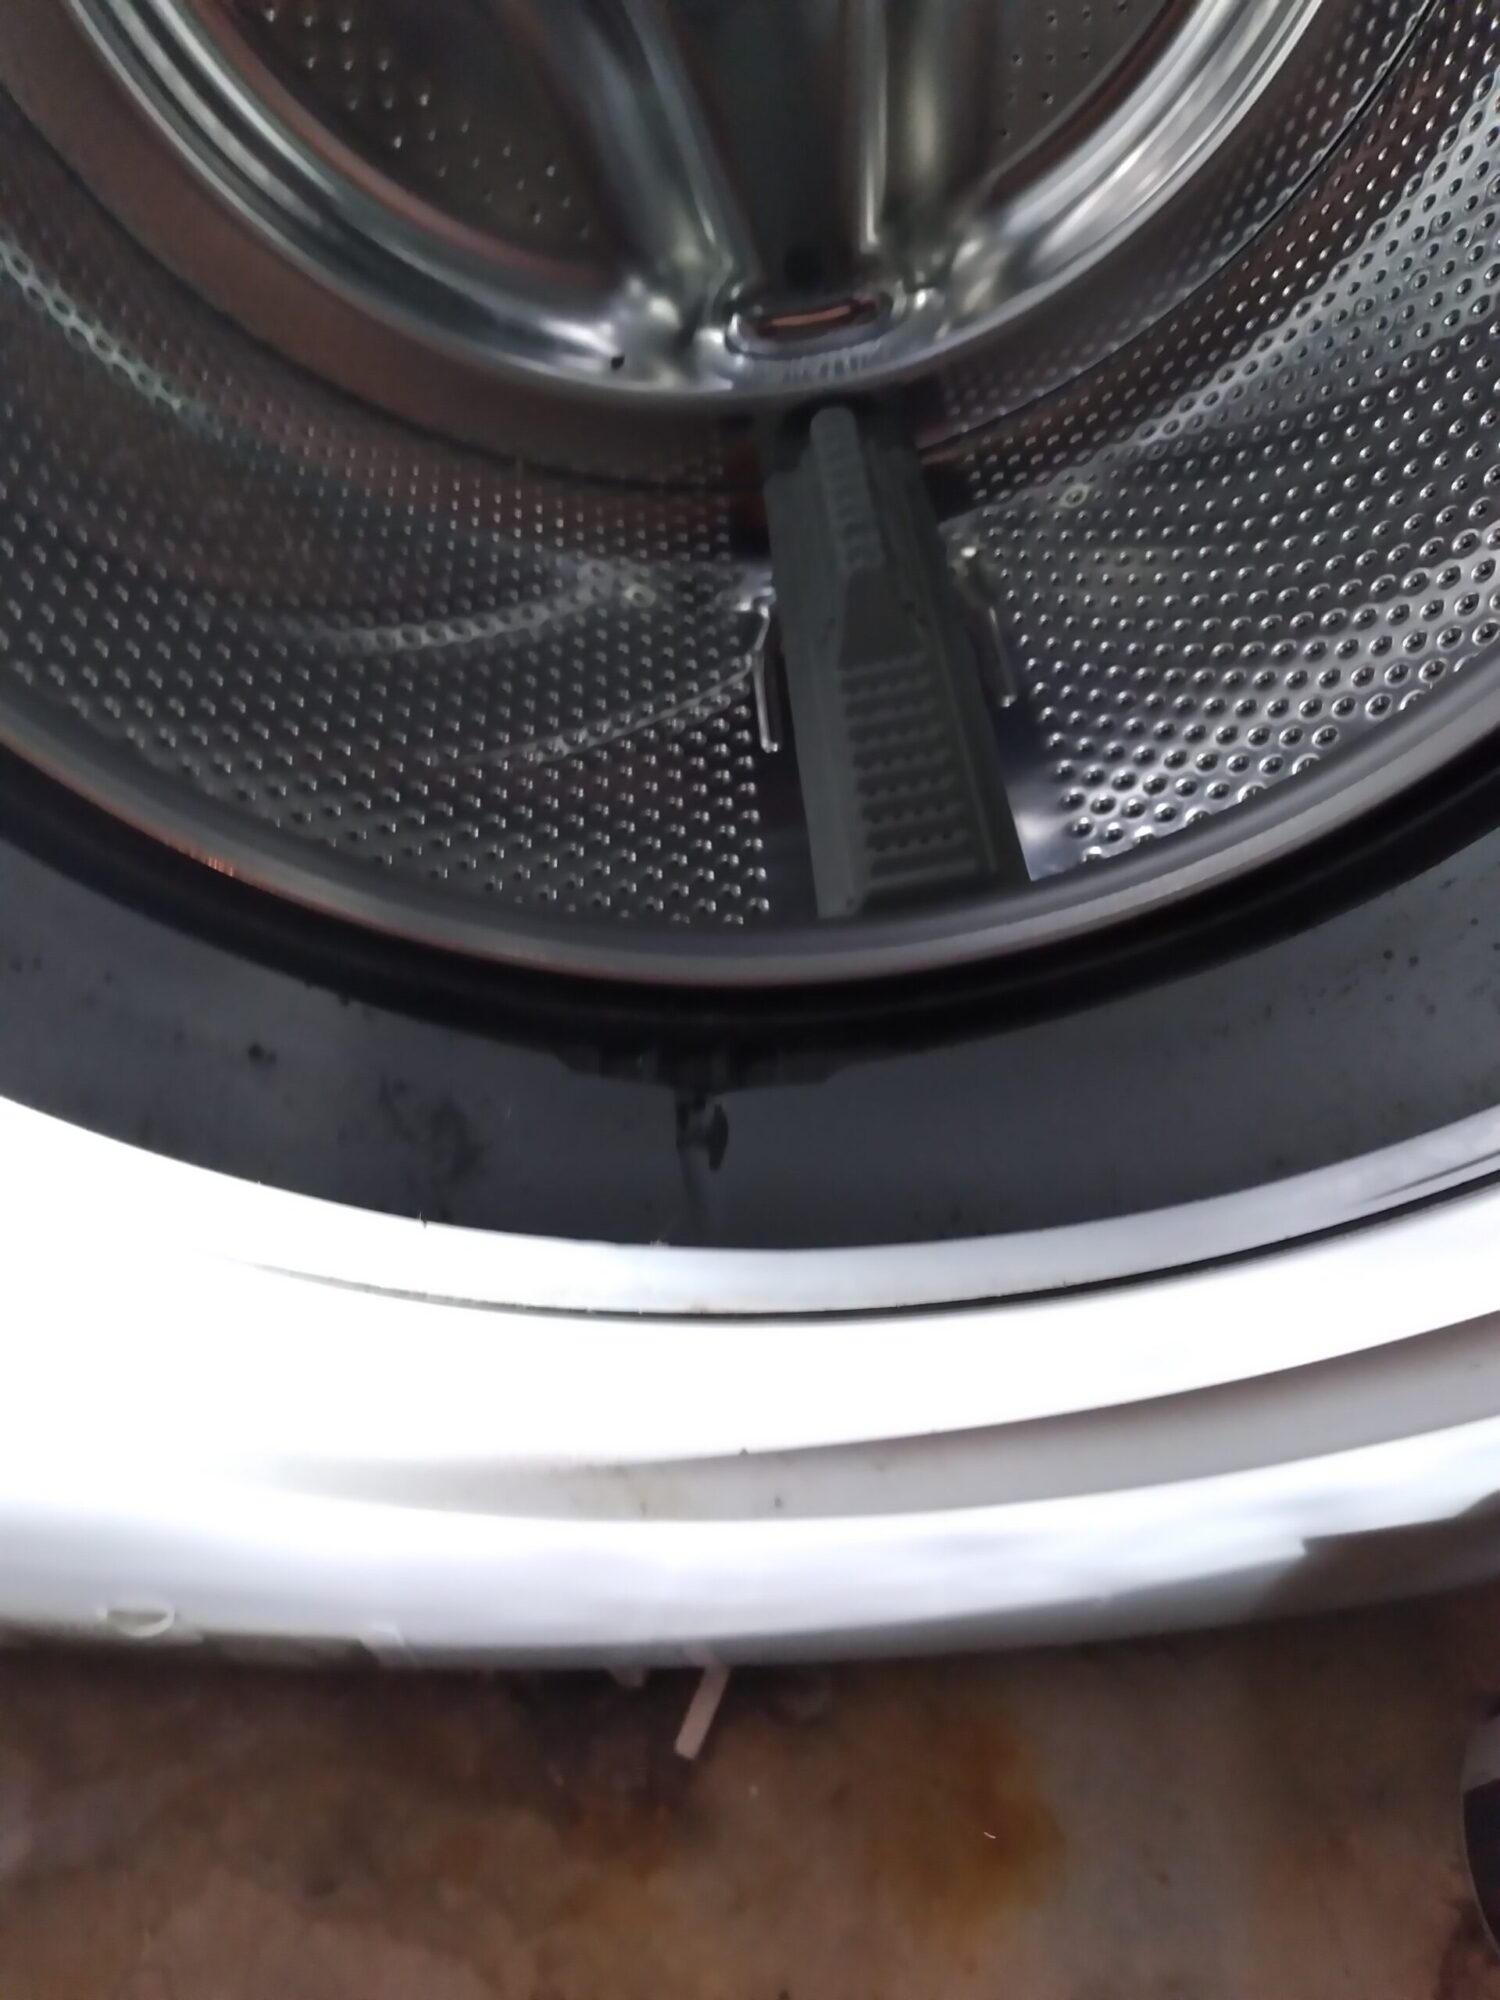 appliance repair washing machine repair door boot broken chula vista ave lady lake fl 32159